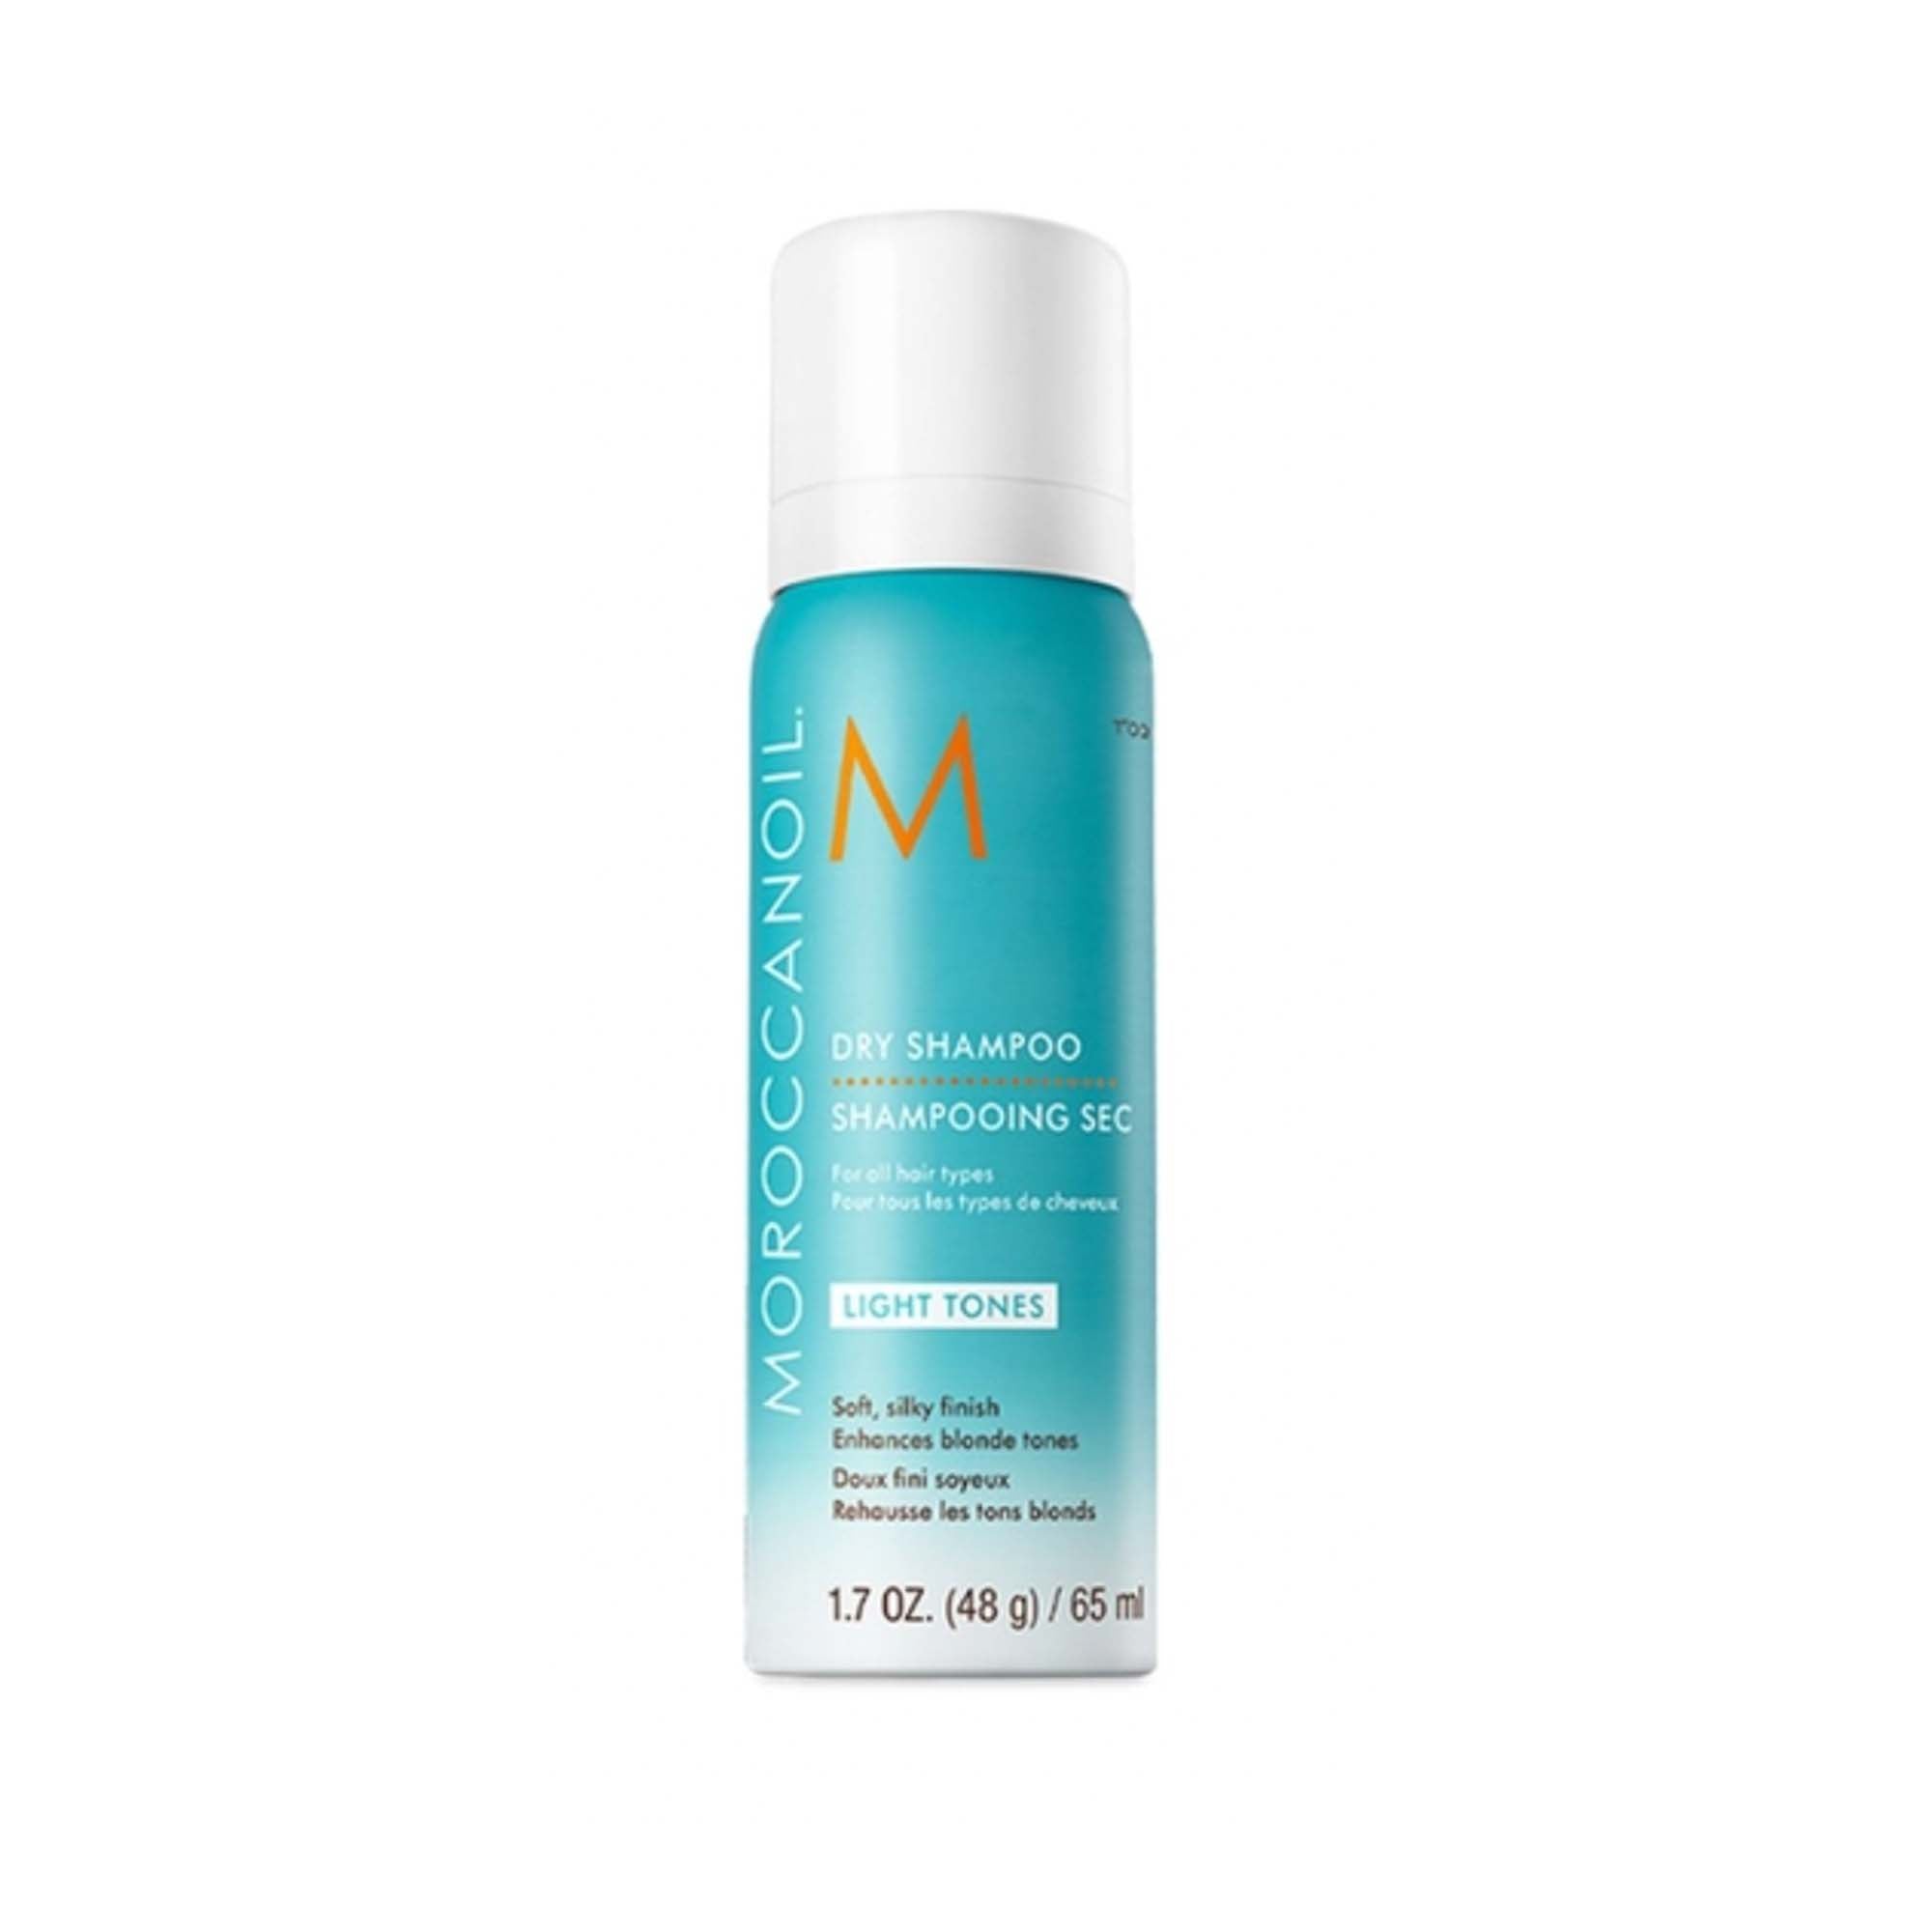 Morrocanoil Dry Shampoo Light Tones 8.2oz